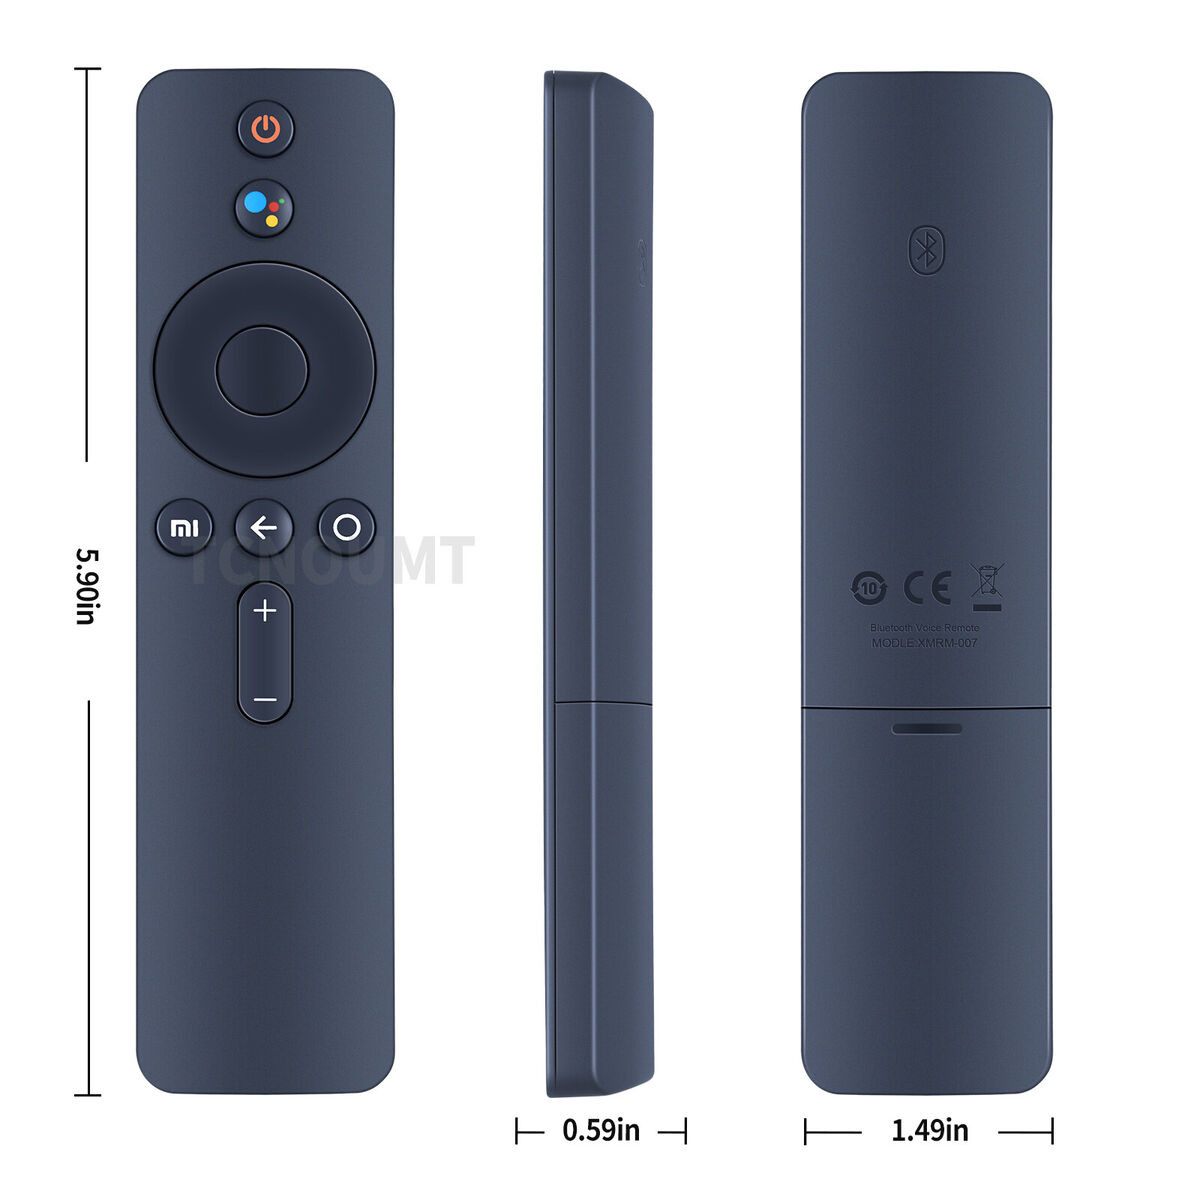 XMRM-010 For Xiaomi MI TV 4S Android Voice Bluetooth Remote Control  L55MS-5ASP